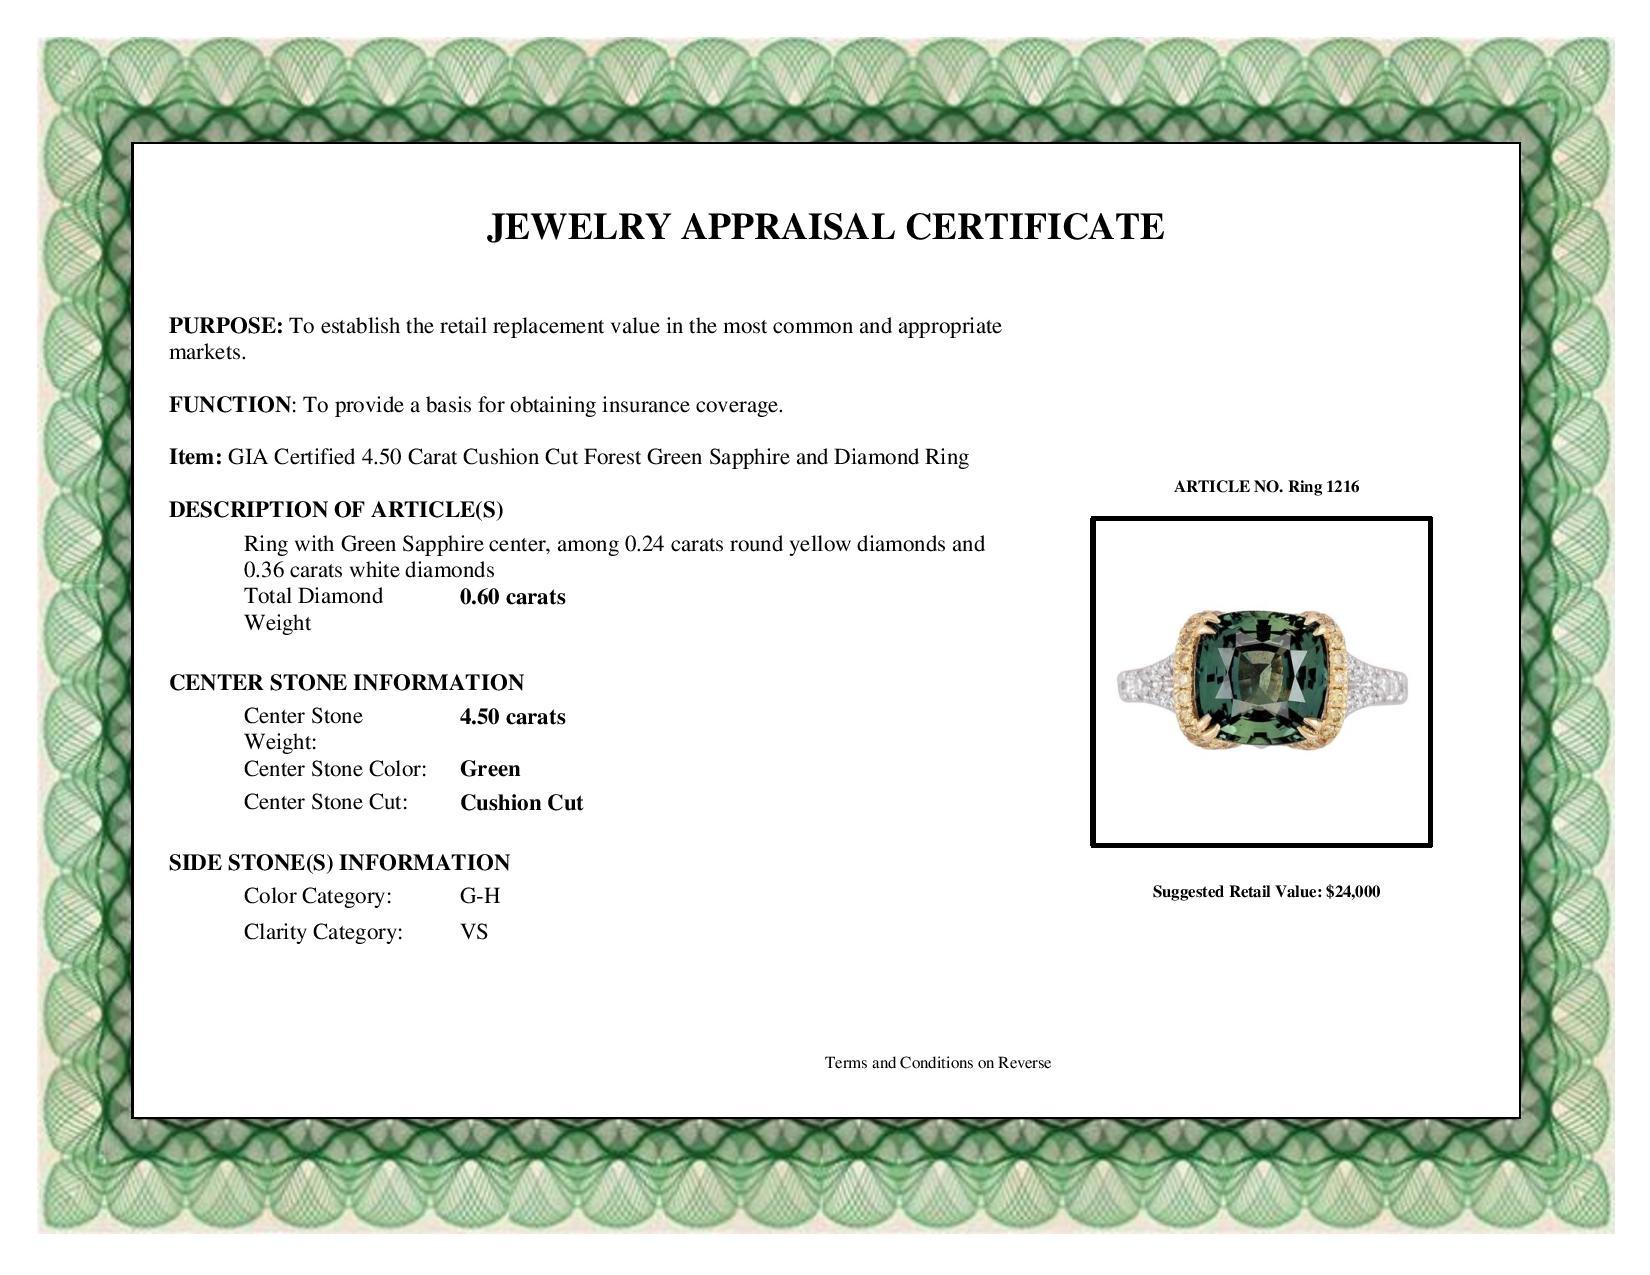 DiamondTown GIA Certified 4.50 Carat Cushion Cut Forest Green Sapphire Ring 2